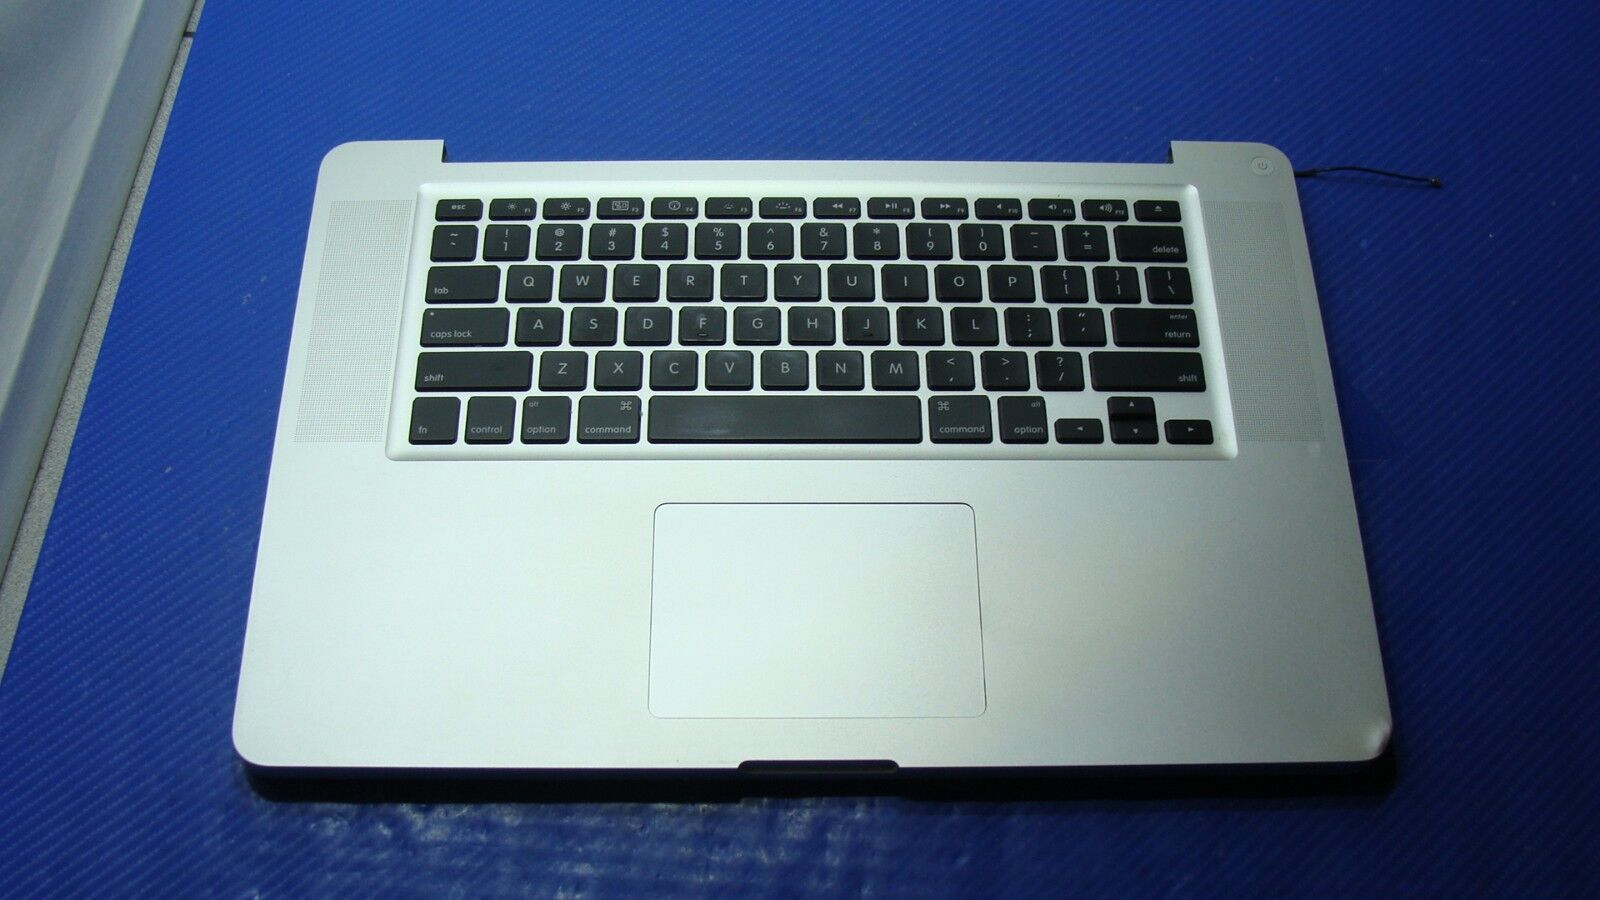 MacBook Pro 15" A1286 Early 2011 MC723LL/A Top Case w/Keyboard Trackpad 661-5854